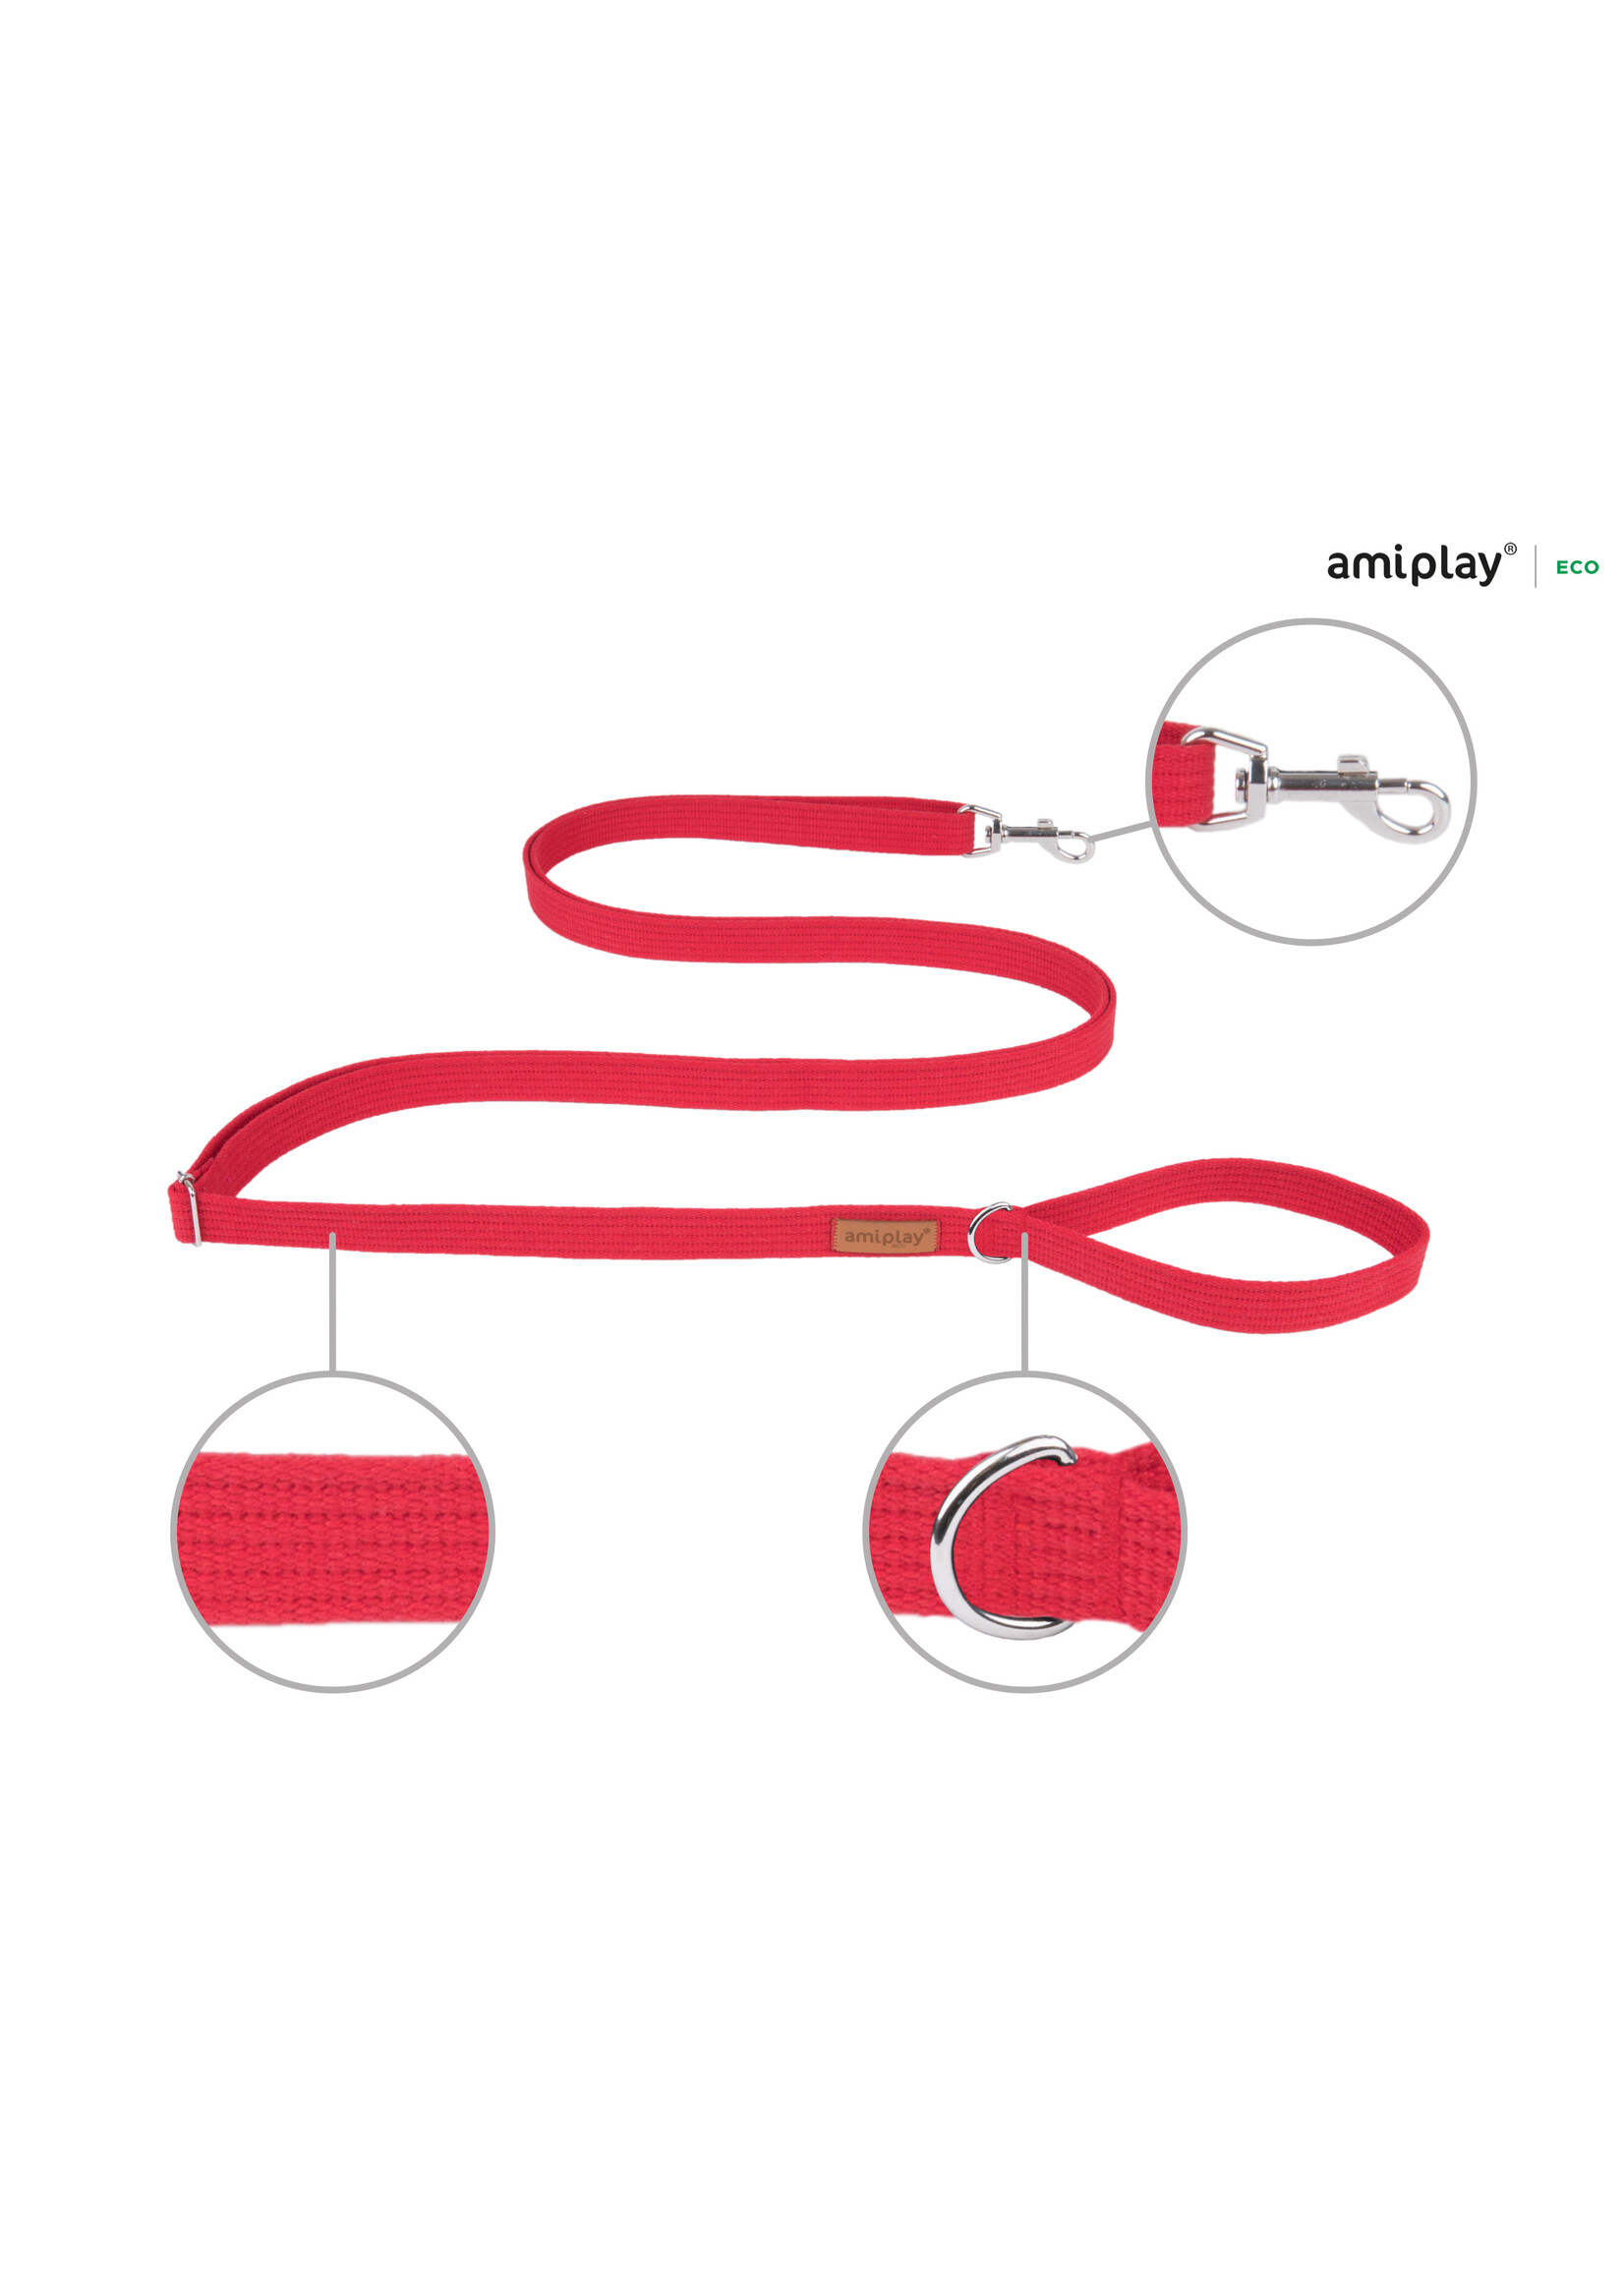 Amiplay Leiband verstelbaar Easy Fix Cotton rood maat-S / 160-300x1,5cm